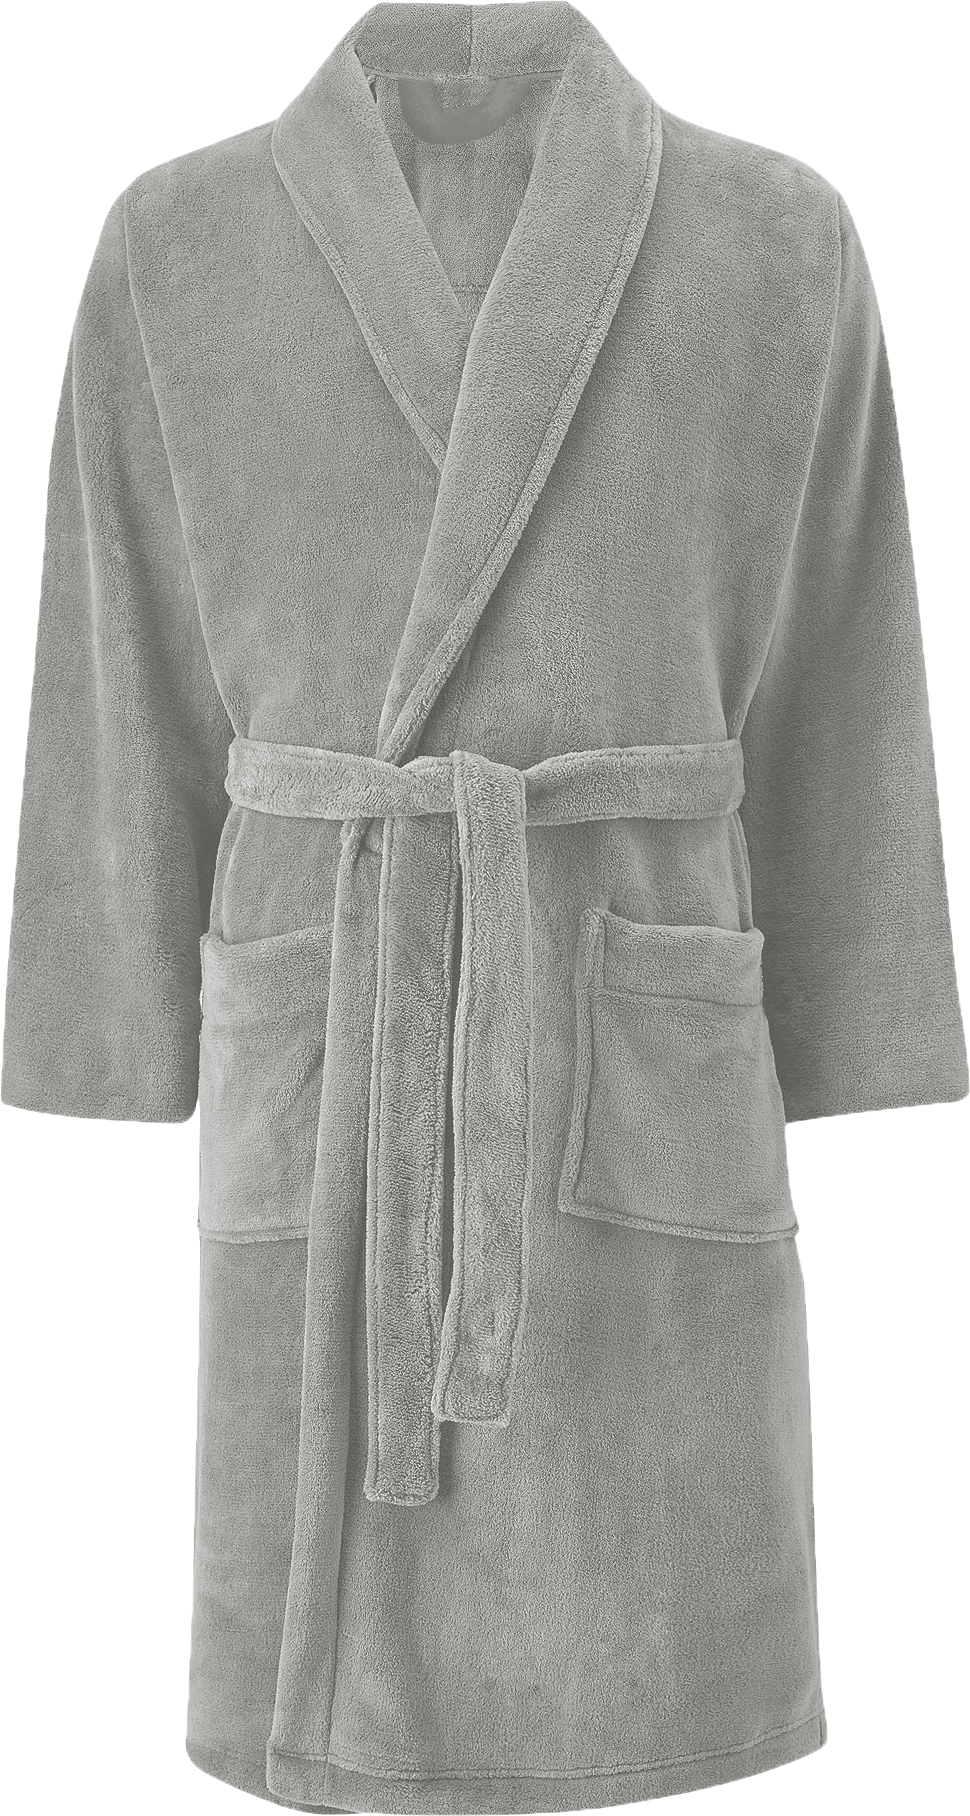 Plush Microfleece Bath Robe - Unisex Adult Size, Shawl Collar